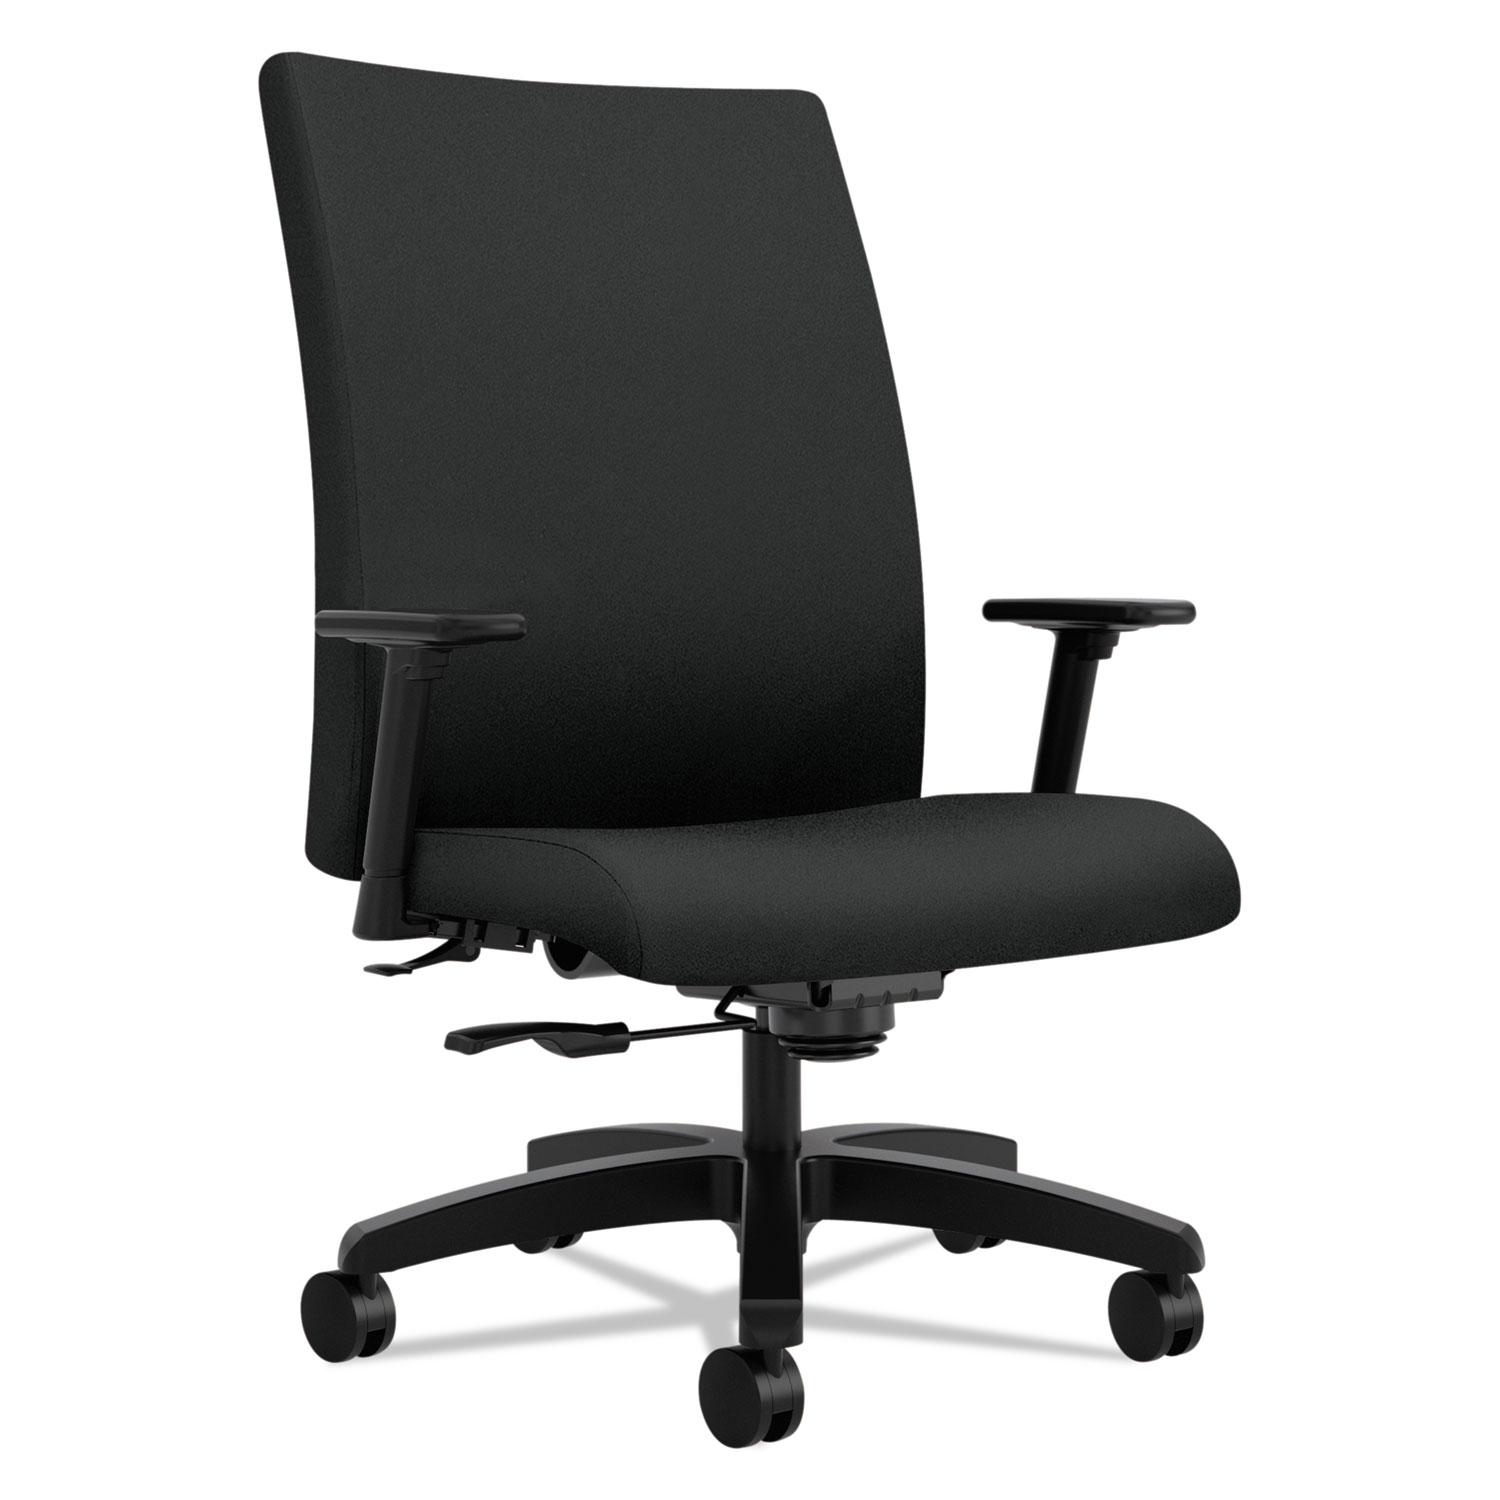  HON HIWM8.A.A.U.CU10.T.SB Ignition Series Big and Tall Mid-Back Work Chair, Supports up to 450 lbs., Black Seat/Black Back, Black Base (HONIW801CU10) 